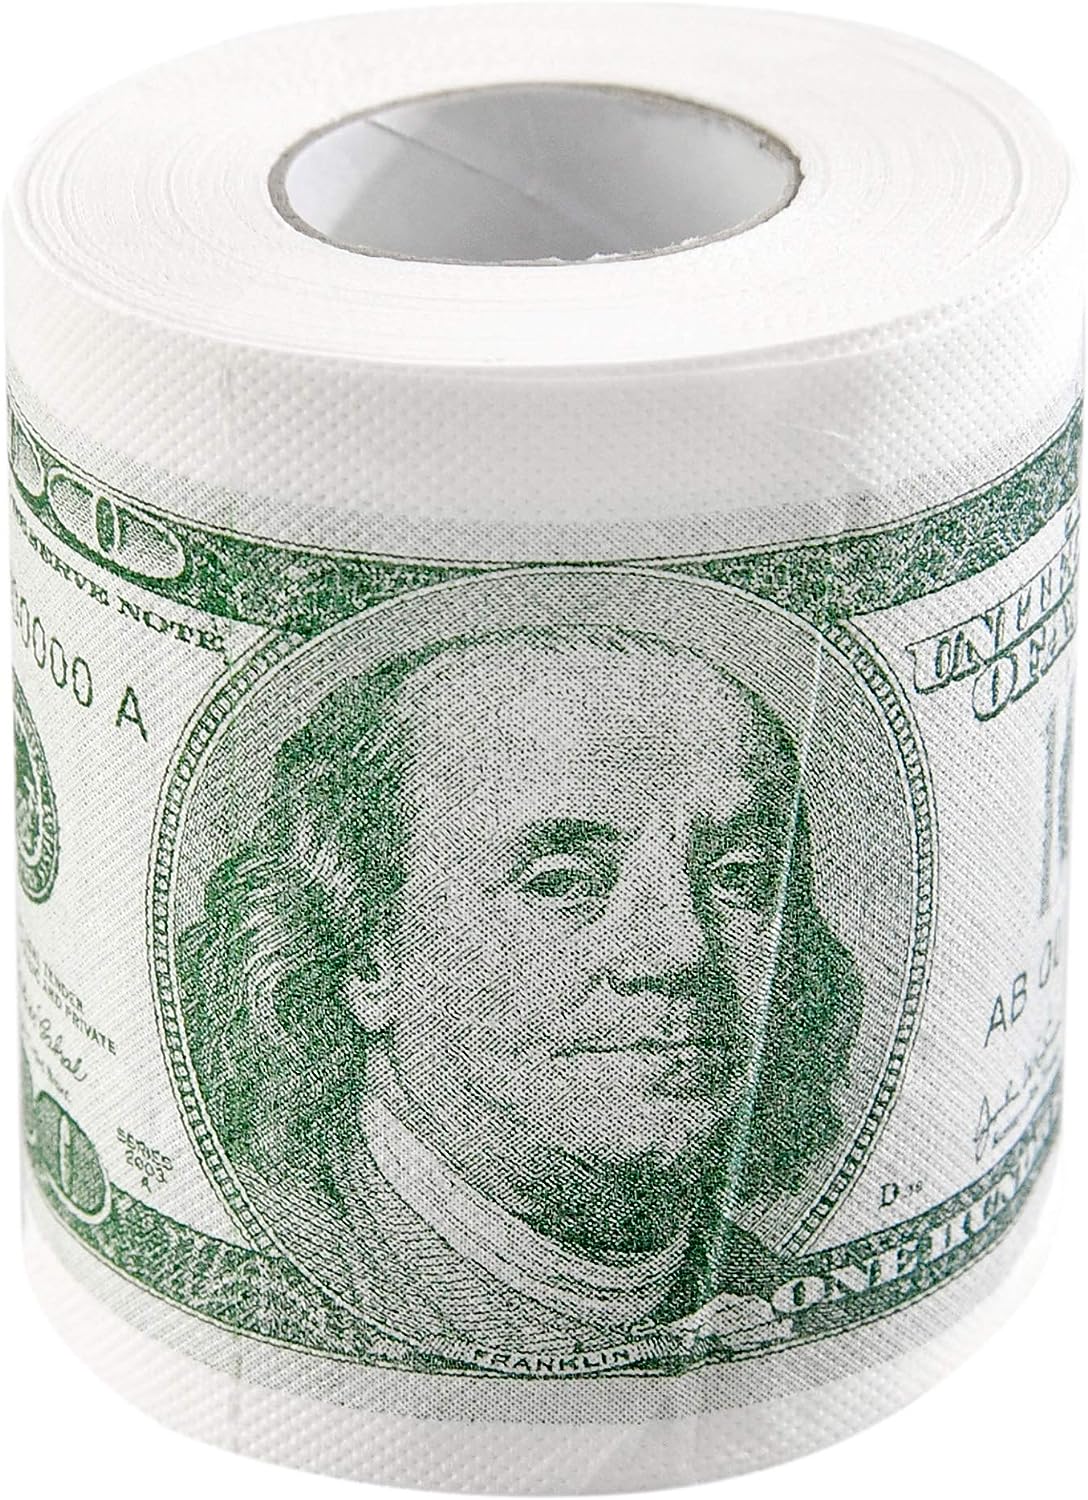 HOME-X $100 Hundred US Dollar Bill Toilet Paper Tissue [...]